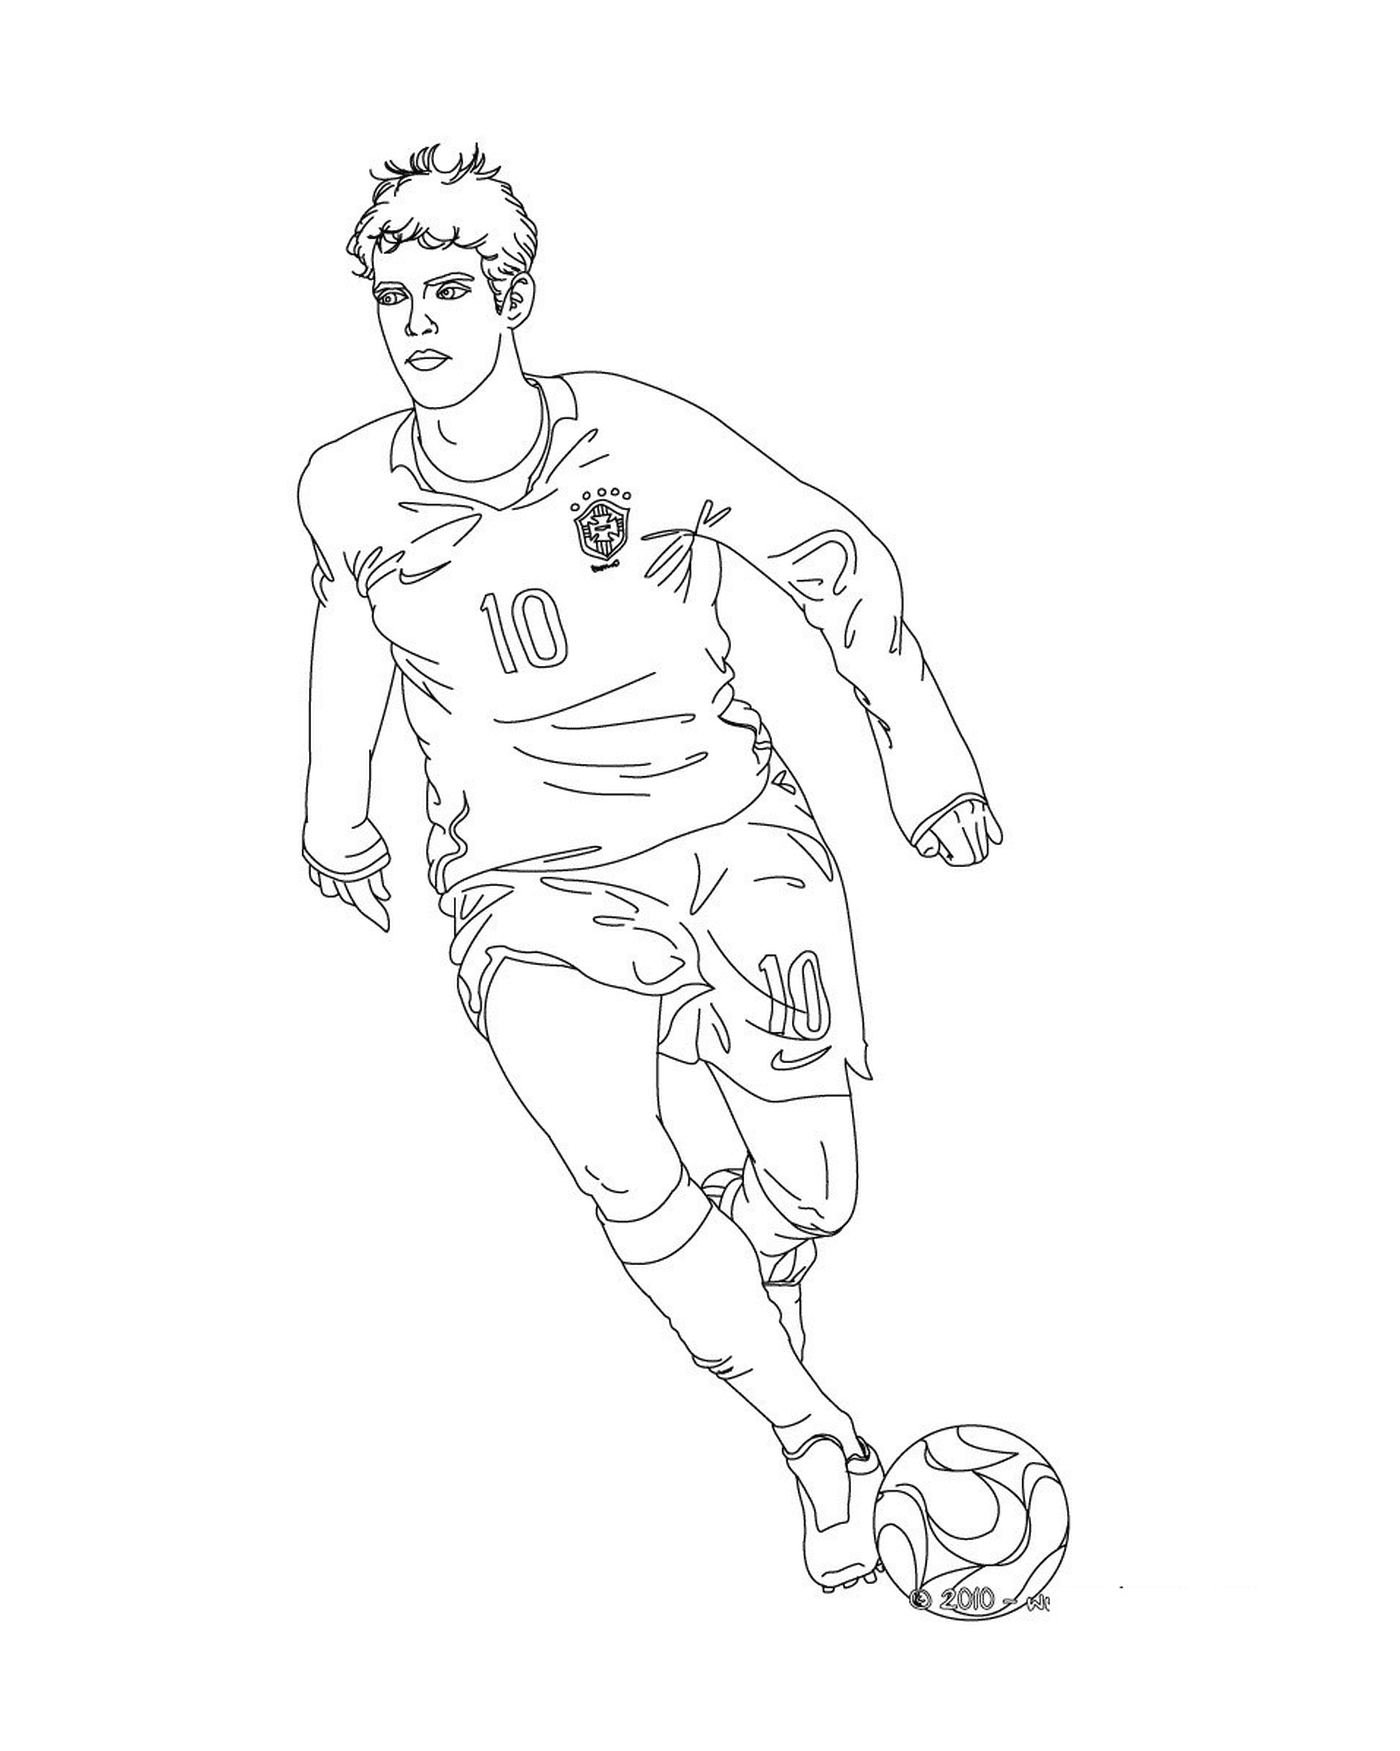   Un homme jouant au football, Kaka 